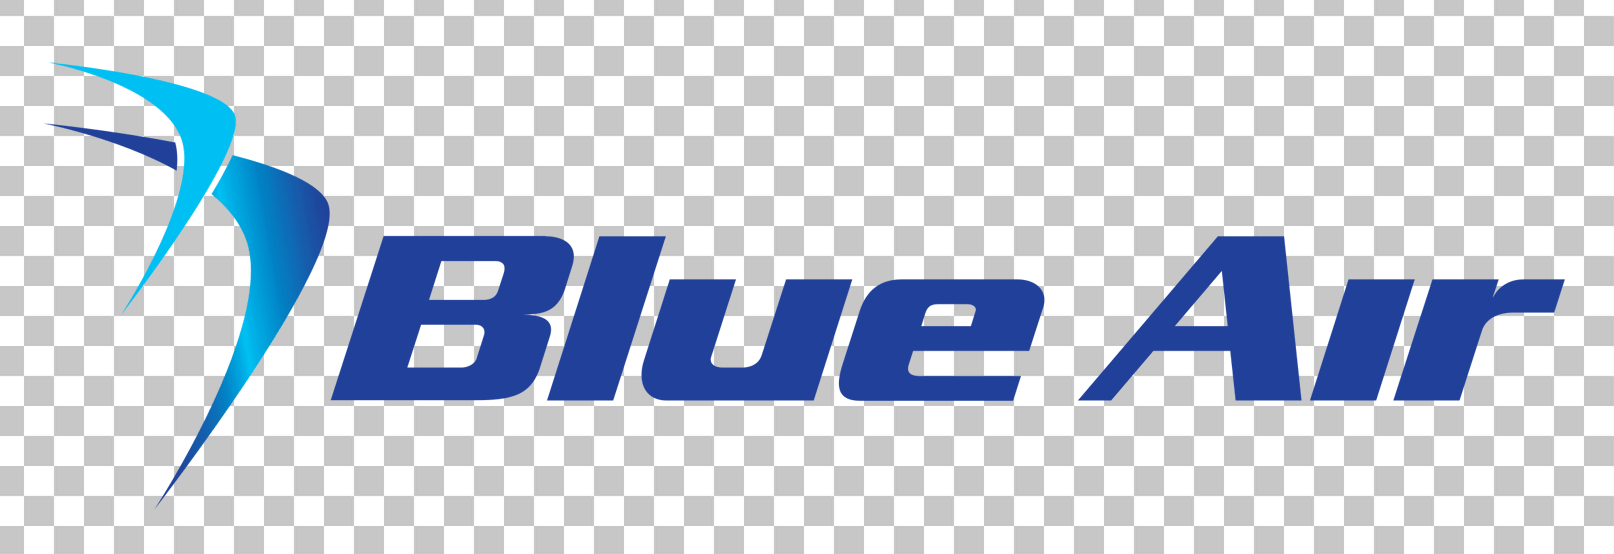 Blue Air logo png image